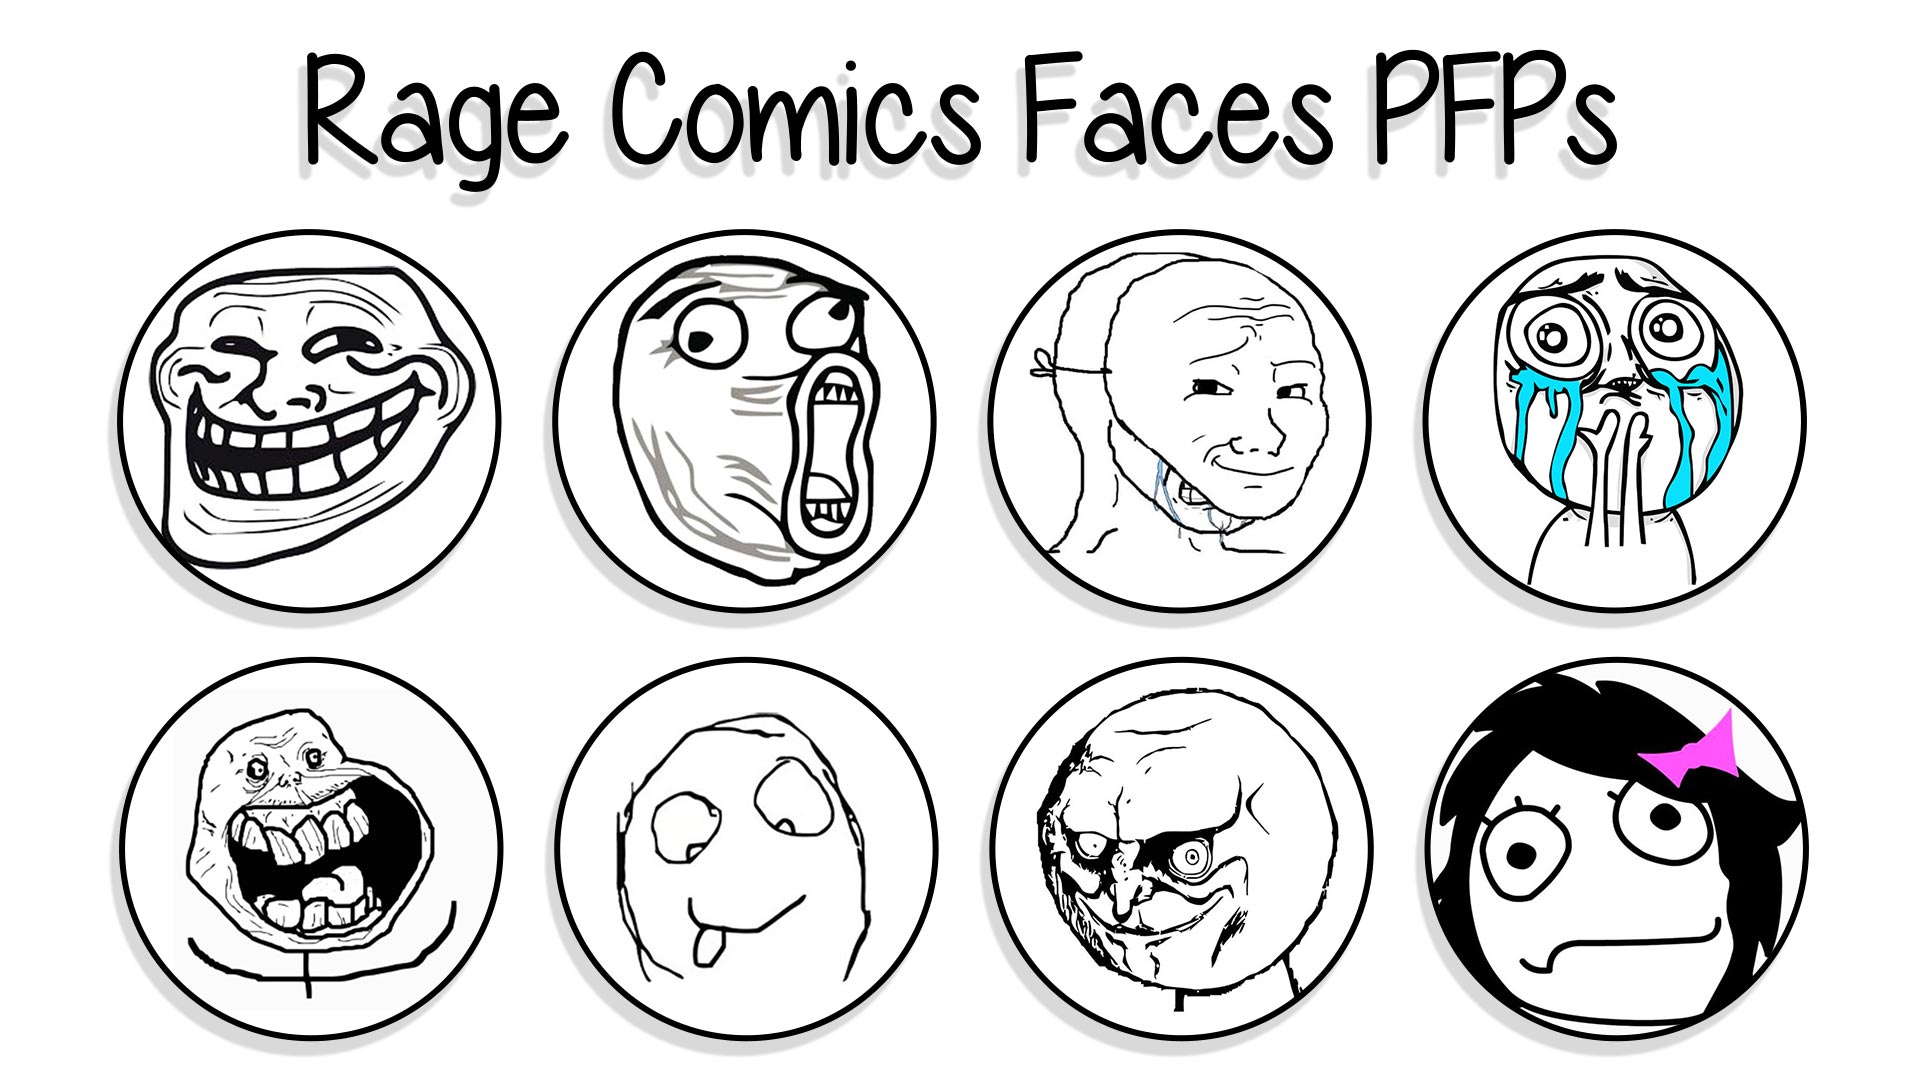 rage comics faces pfps